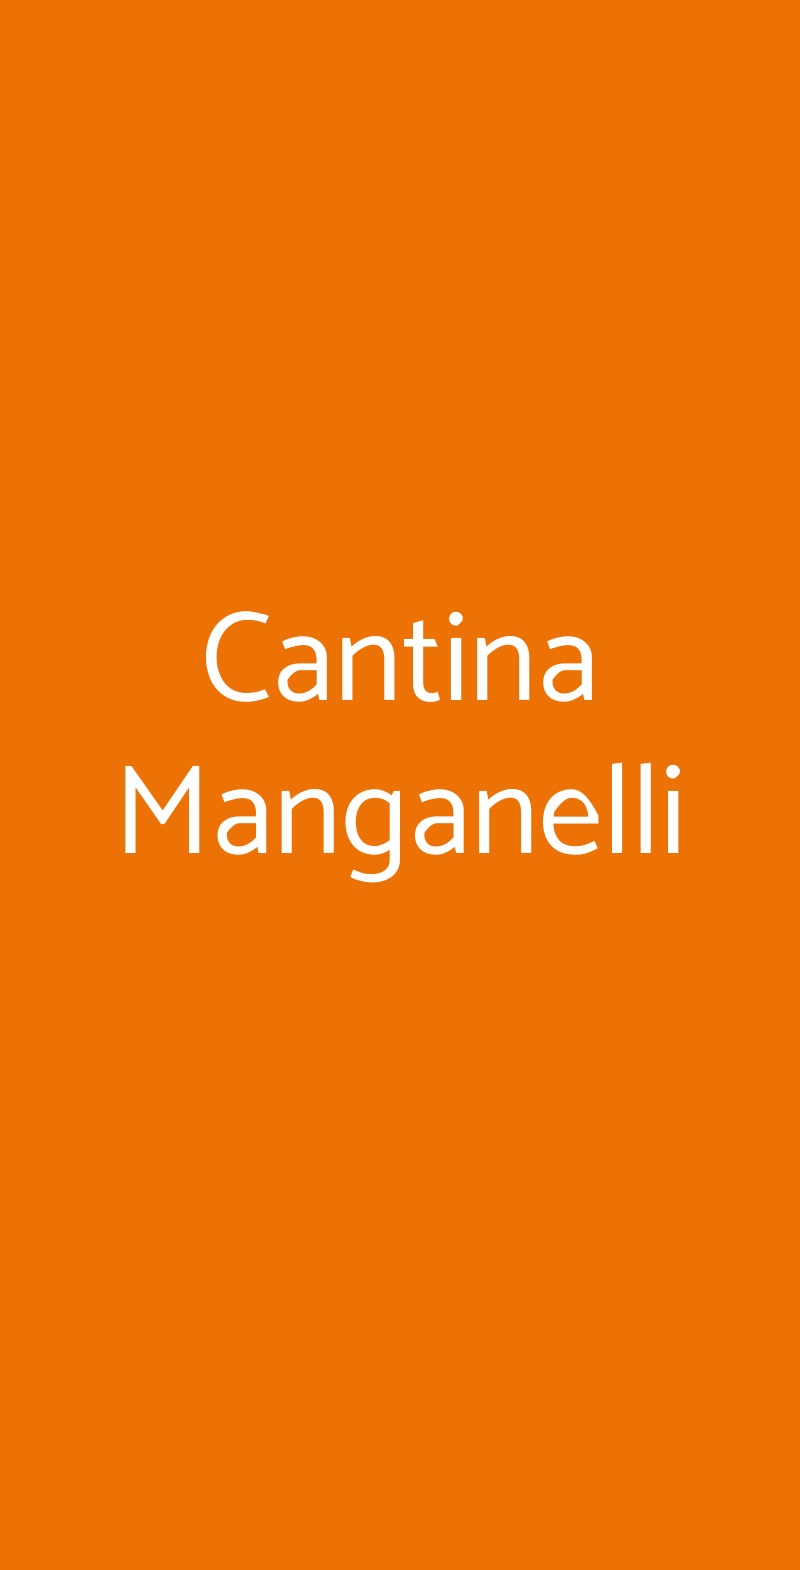 Cantina Manganelli Catania menù 1 pagina